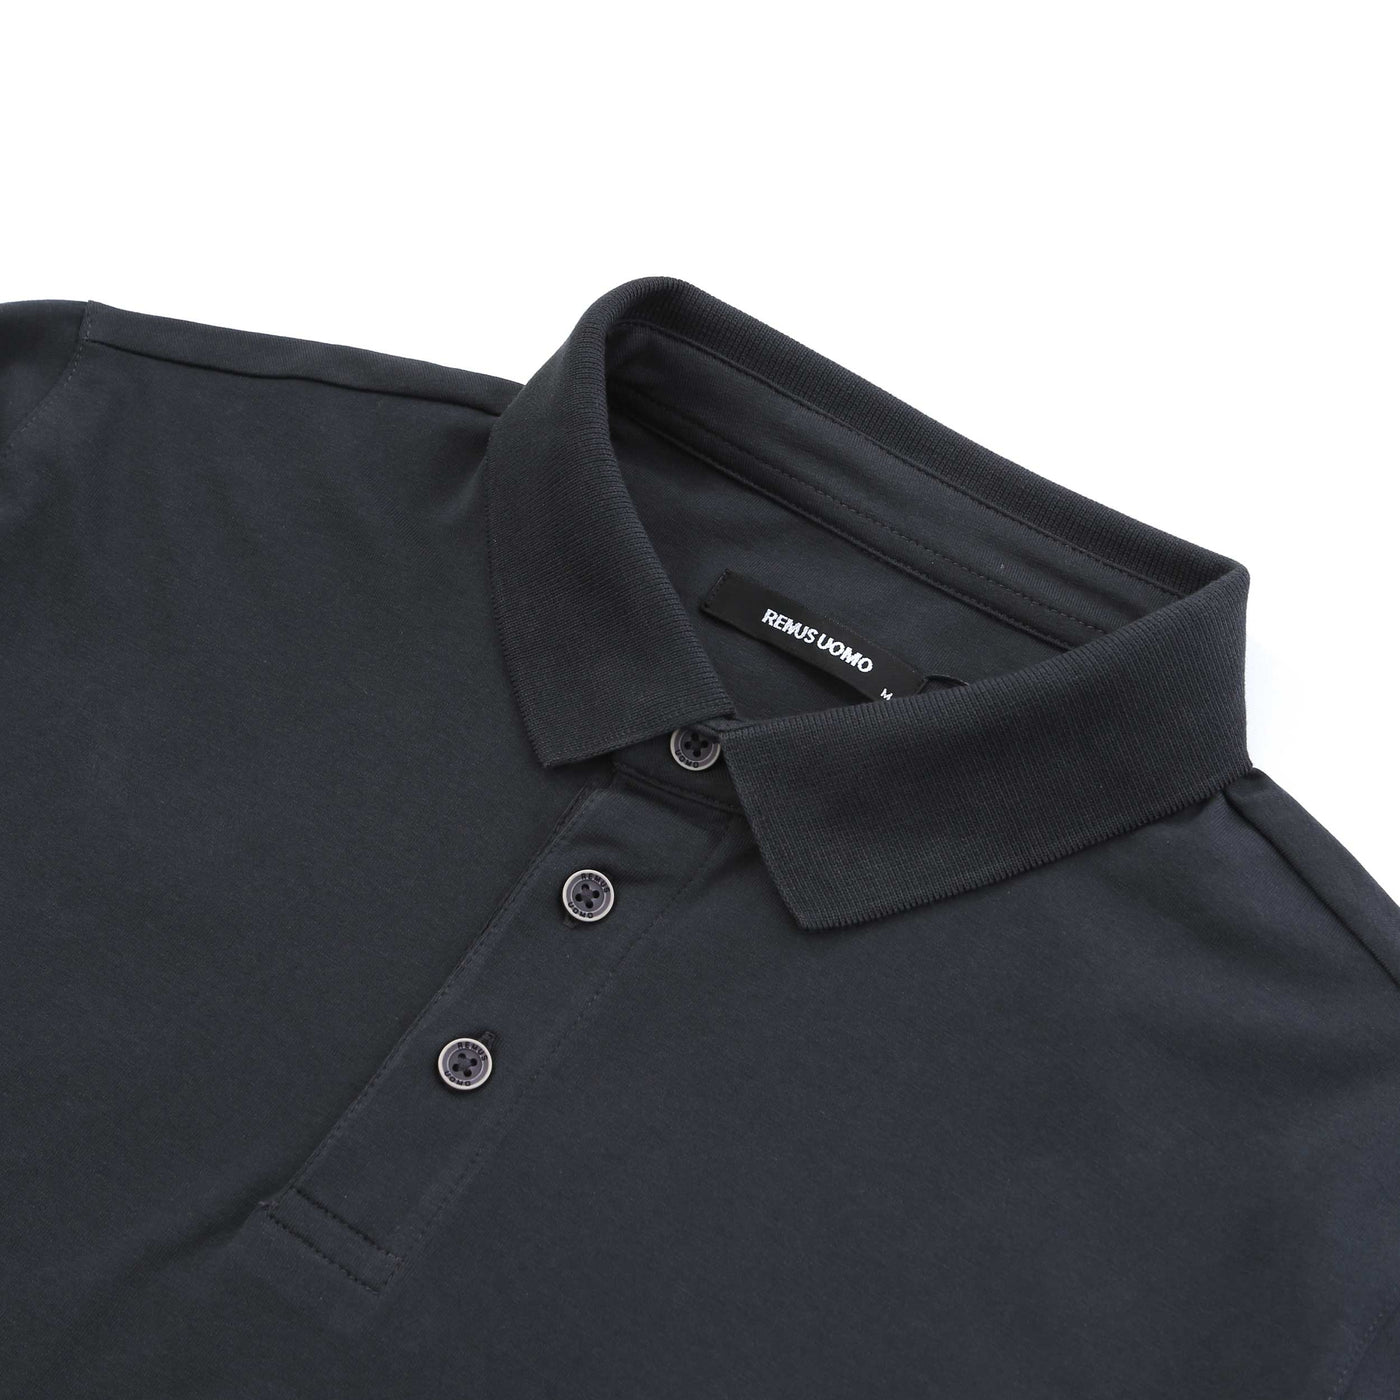 Remus Uomo Plain LS Polo Shirt in Charcoal Collar